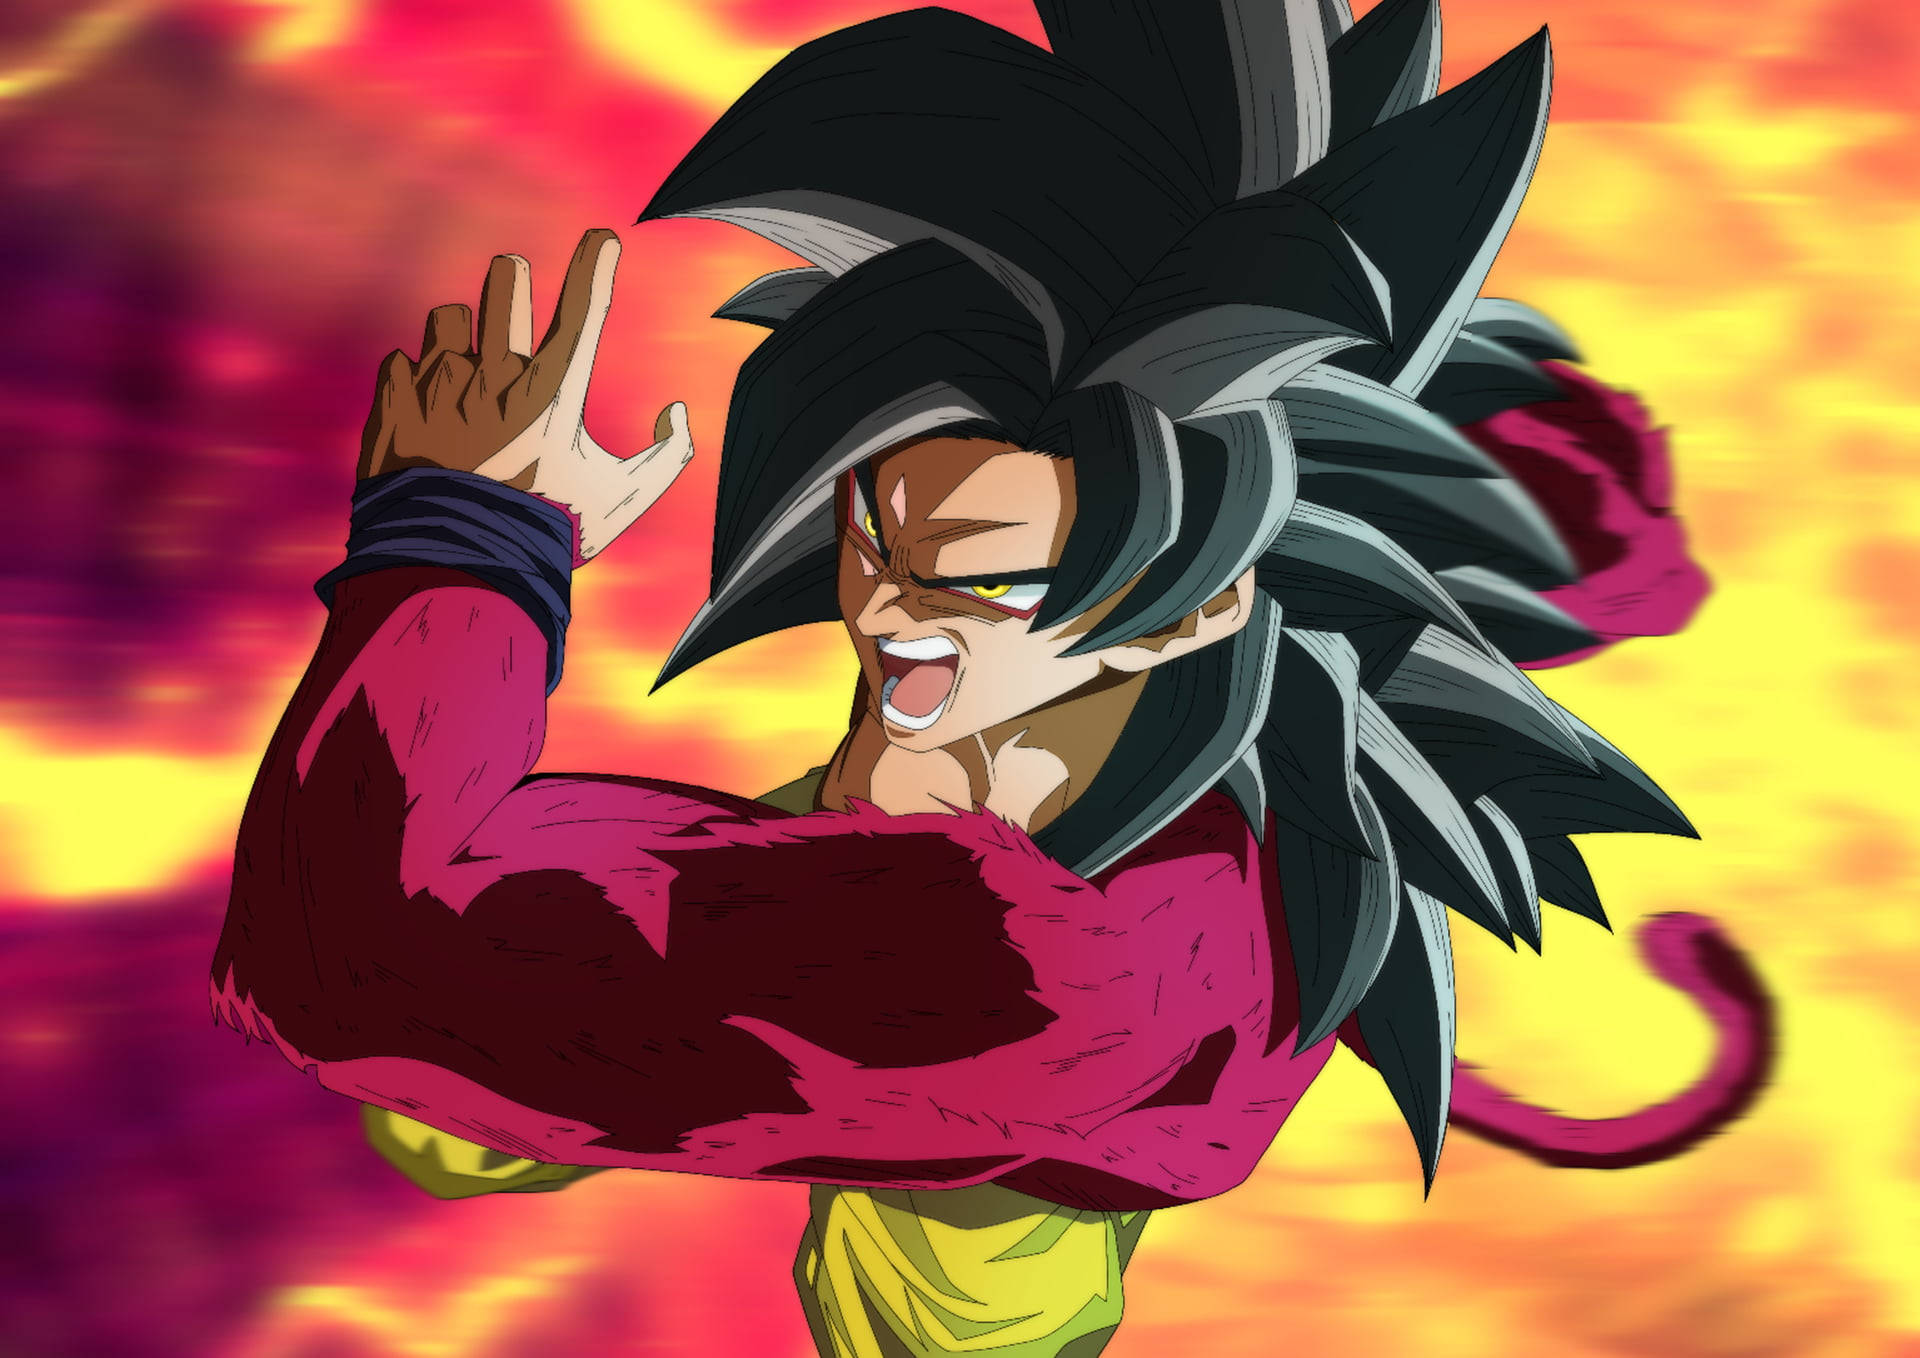 Ssj4 Goku Fighting Pose Wallpaper